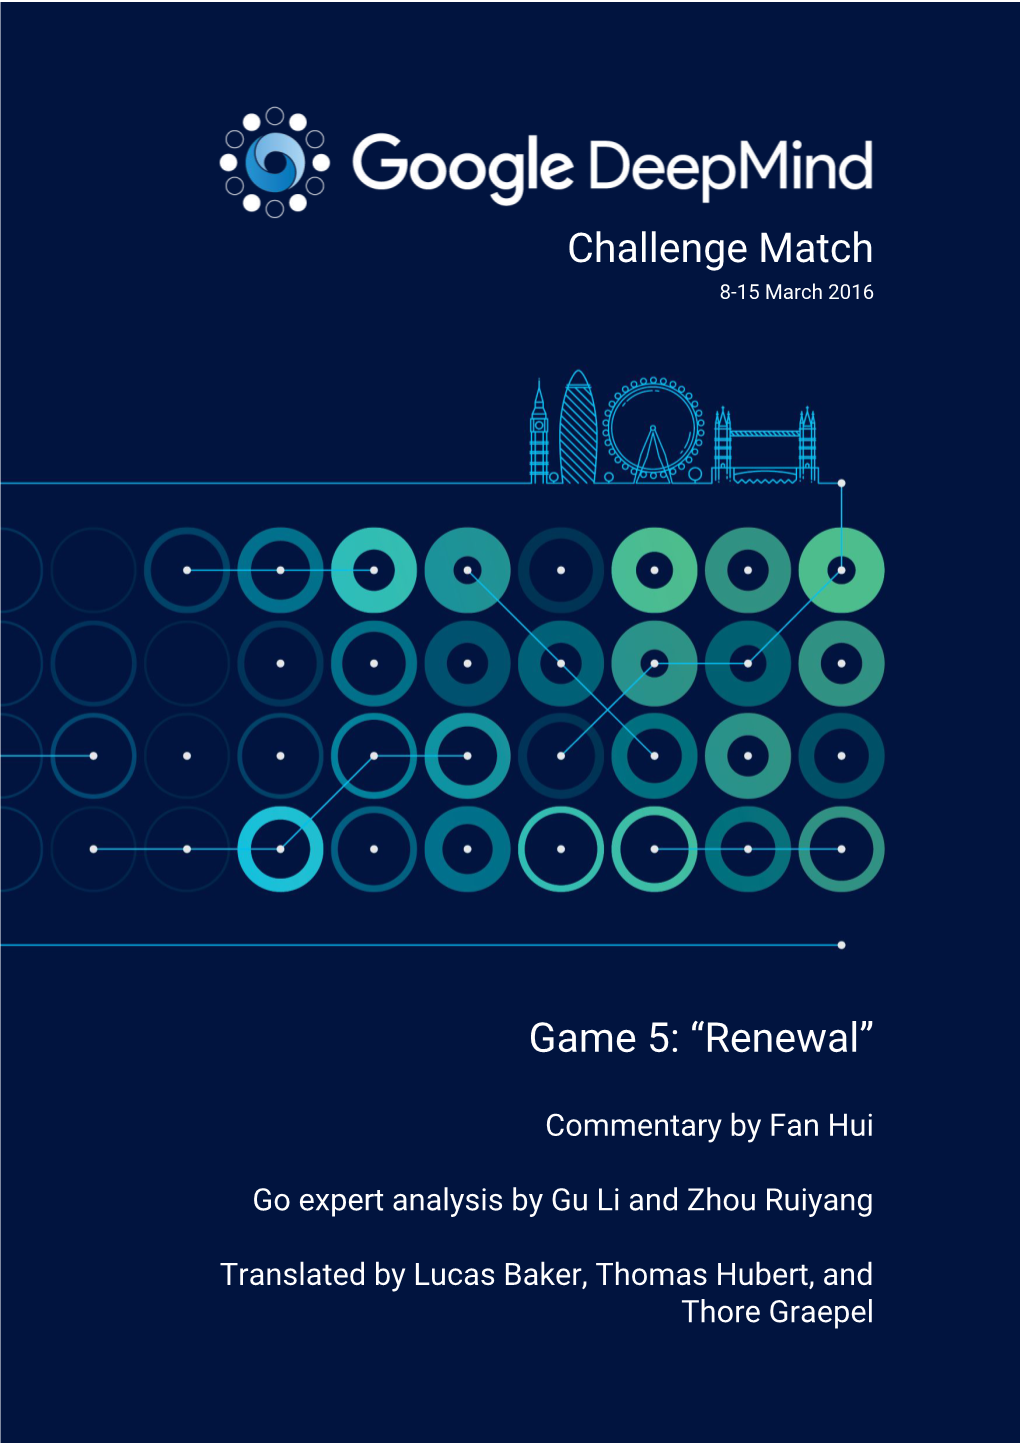 Challenge Match Game 5: “Renewal”